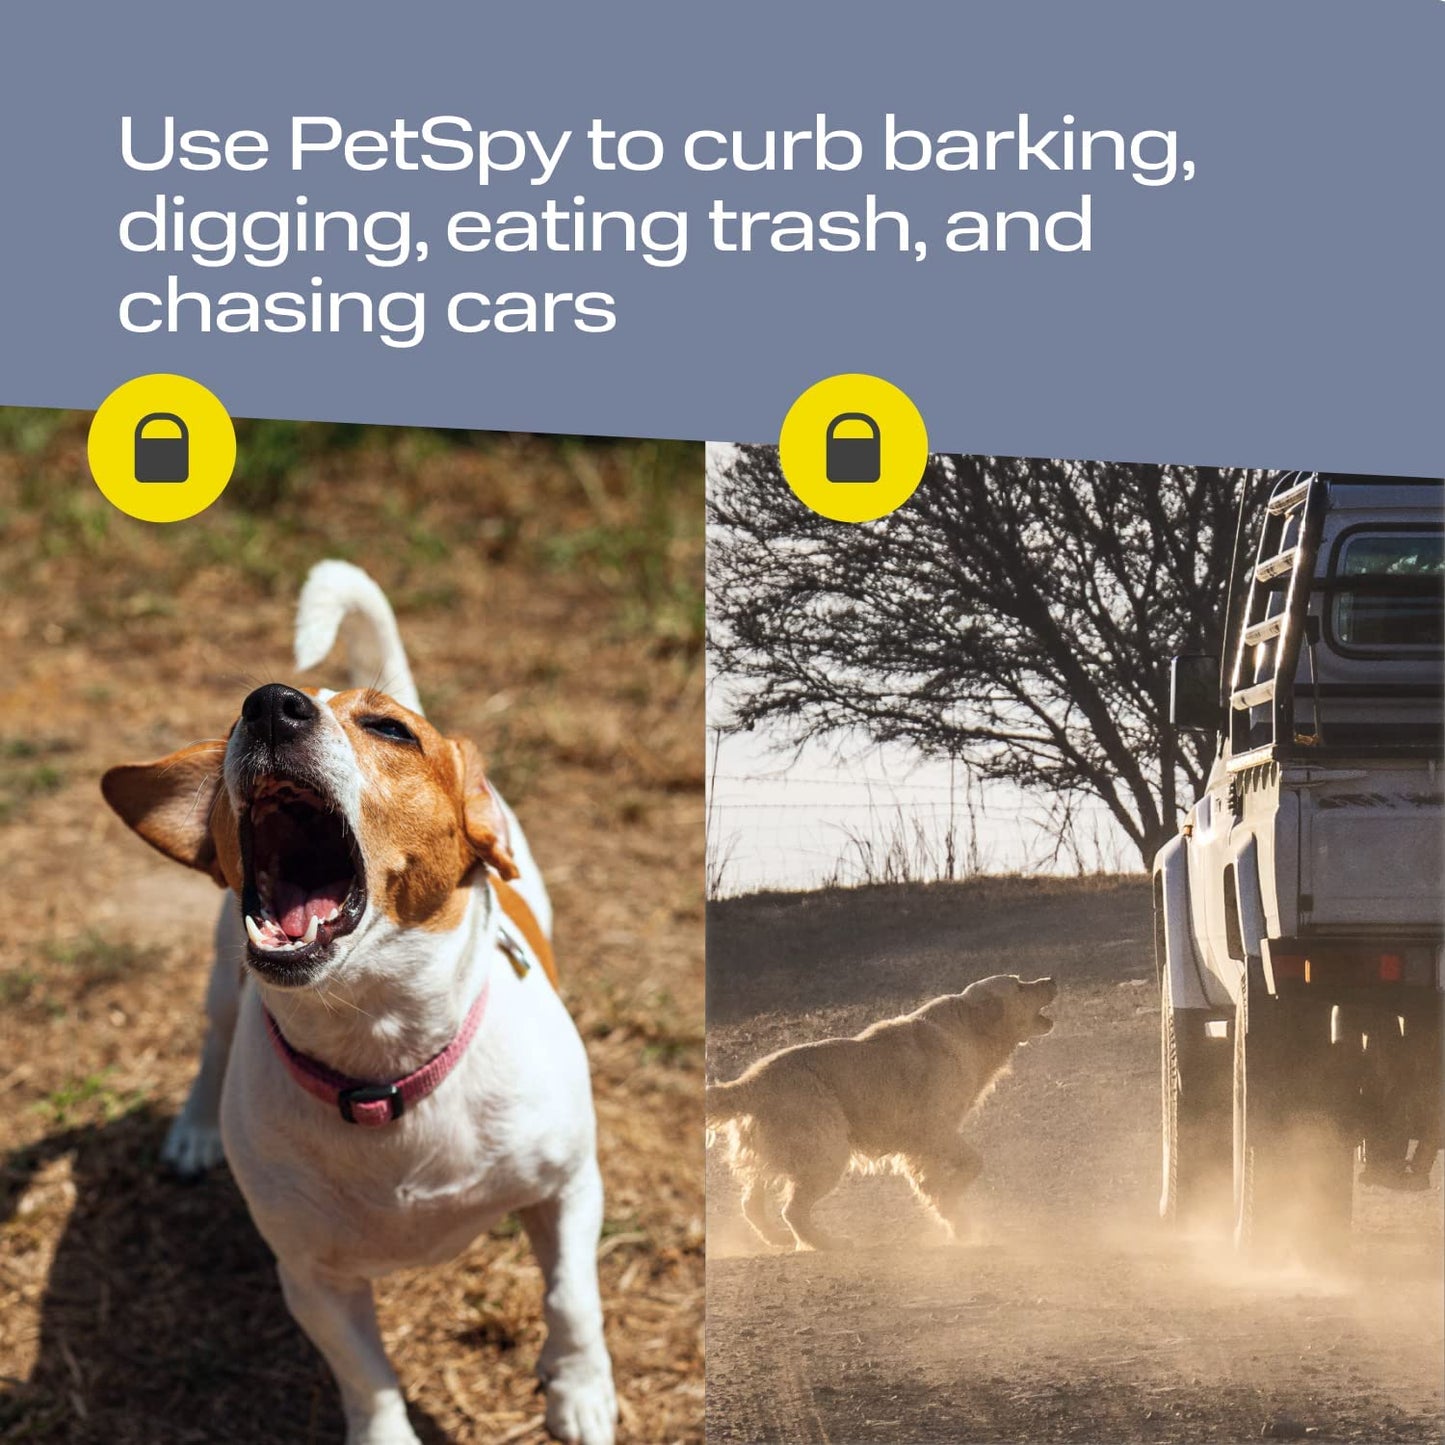 use petspy to curb barking, digging, eating trash and chasing cars